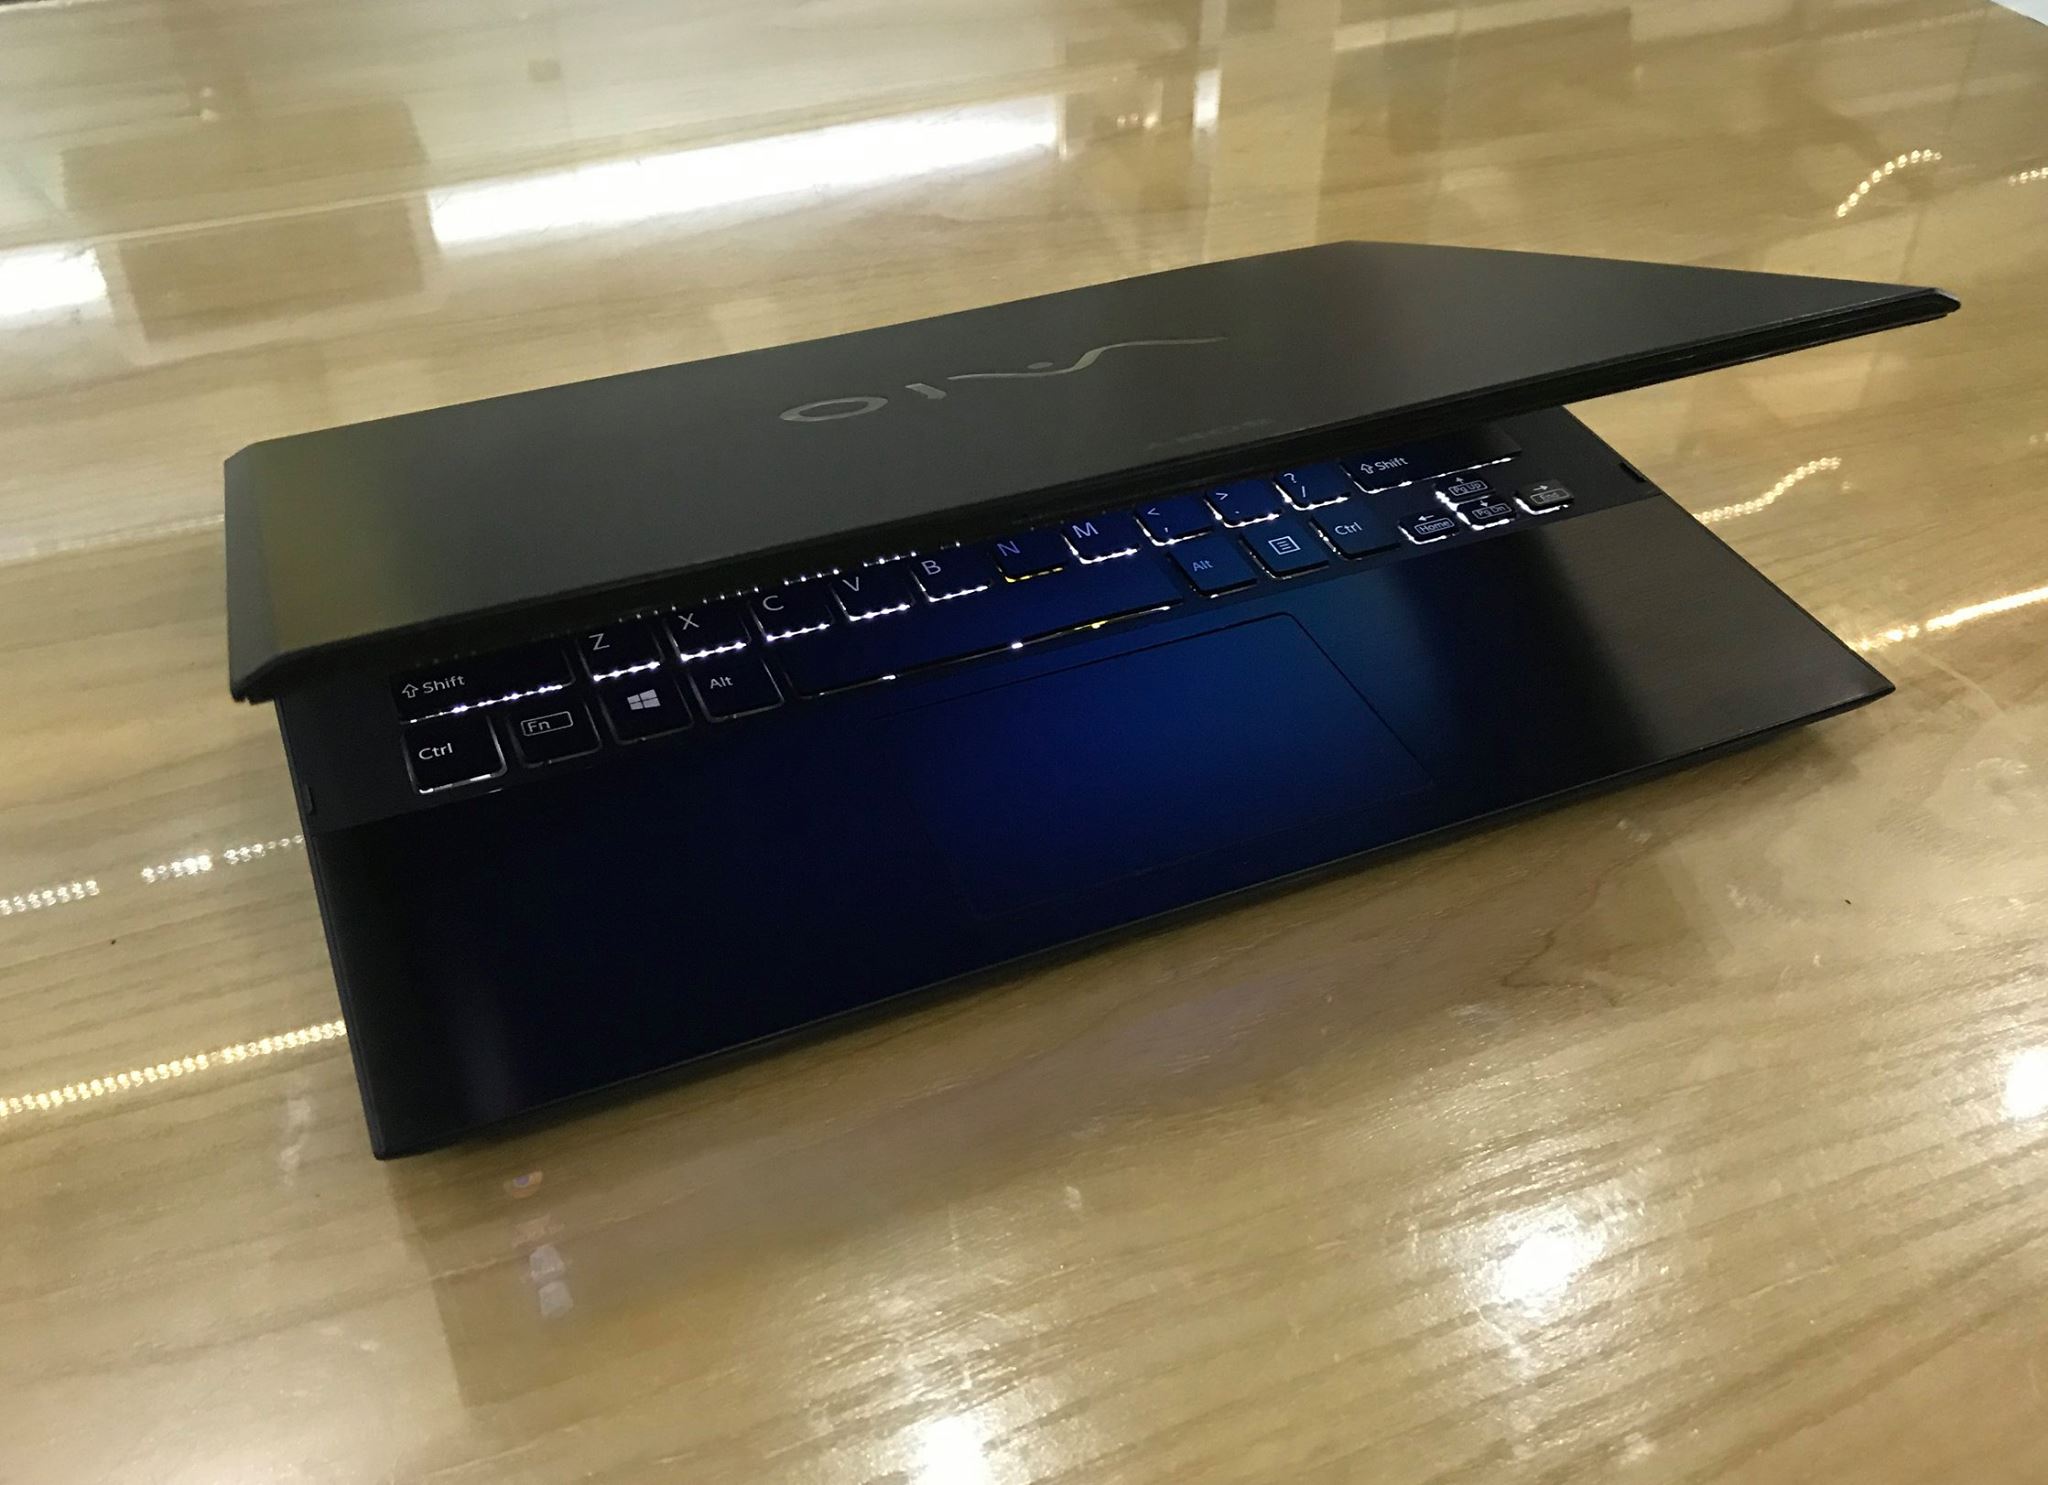 Laptop Sony Vaio Pro 13 SVP11 - Ultrabook.jpg